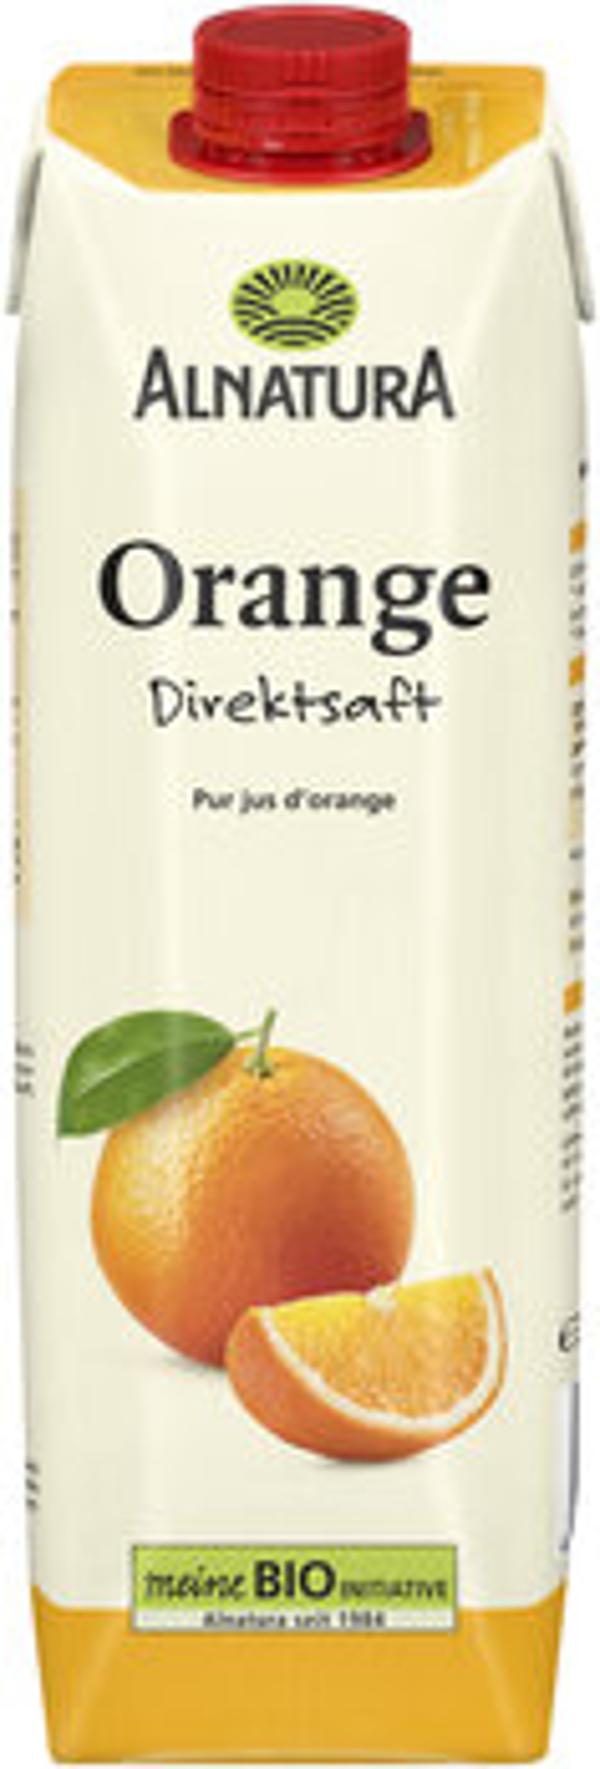 Produktfoto zu Alnatura  Orangensaft 1L